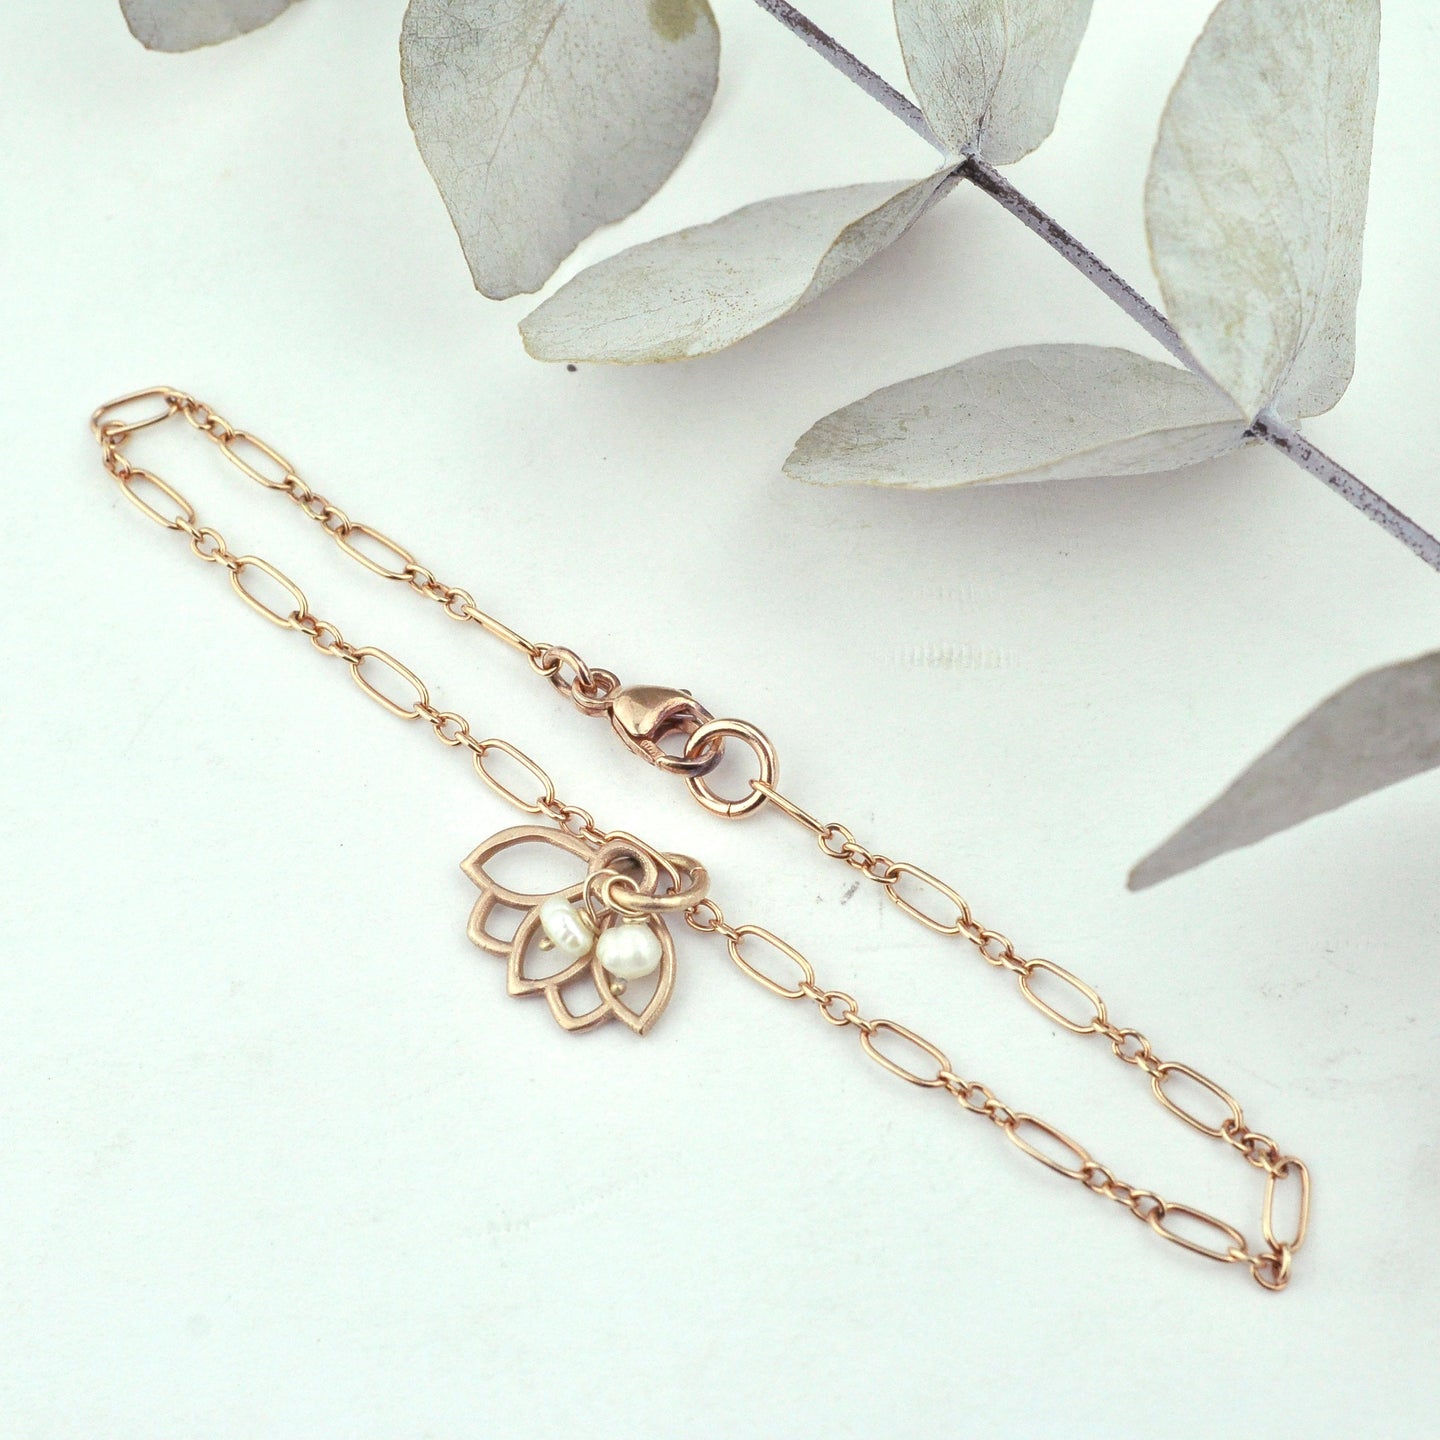 Pearl bracelet, 9ct Rose gold Lotus charm (bracelet rose gold plated), June Birthstone.